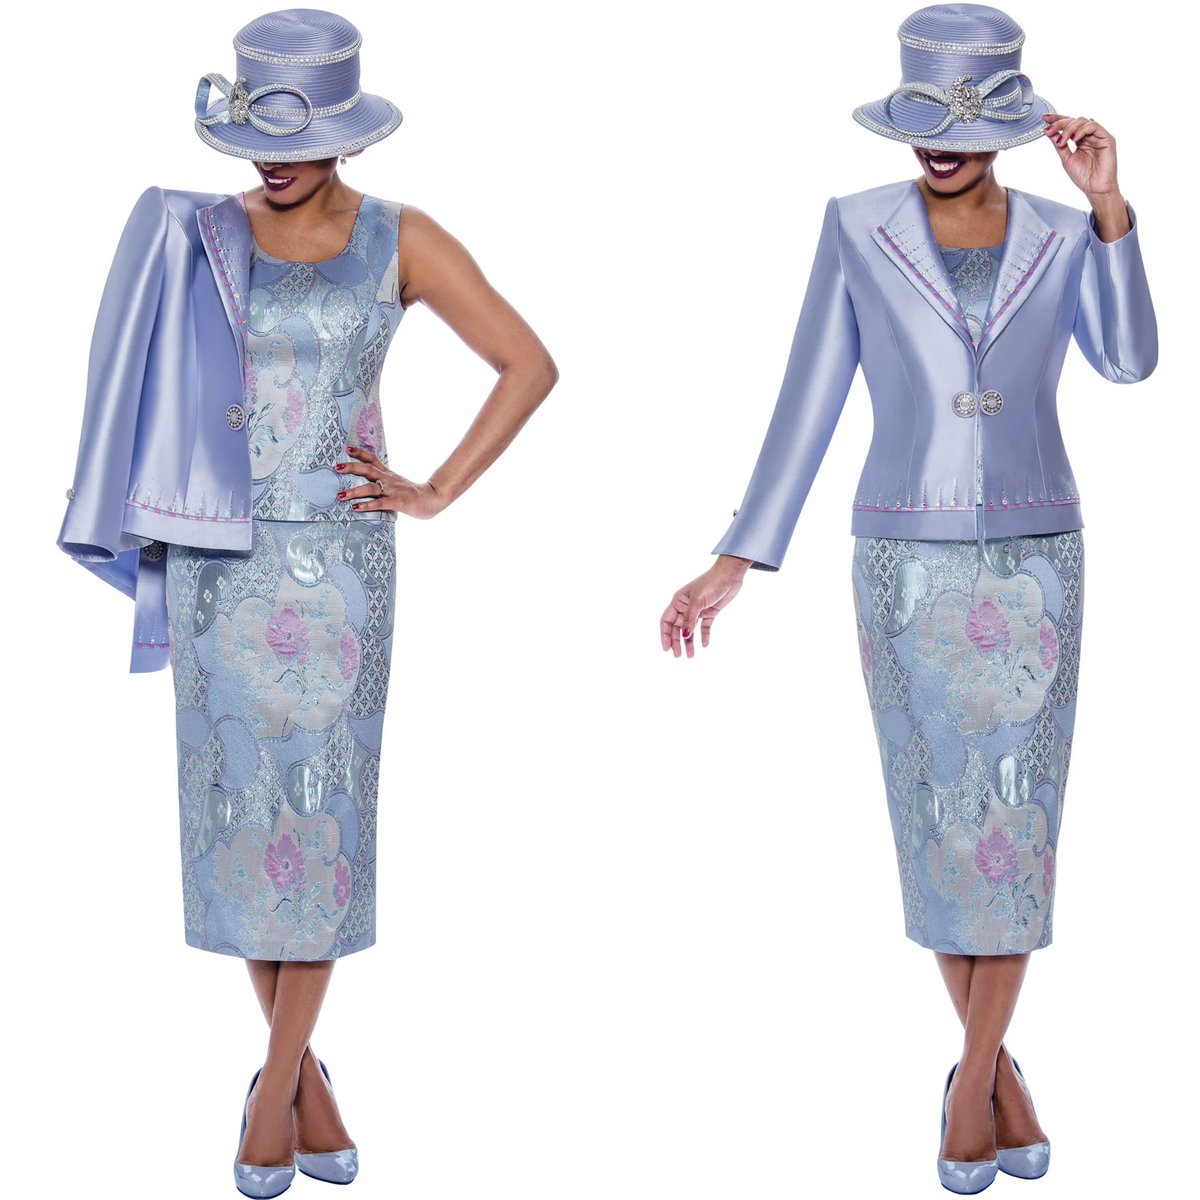 Ben Marc 2083 Lilac Silky Twill Skirt Suit 
divasdenfashion.com/products/ben-m… 

#DivasDenFashion #lilacskirtsuit #lilacsuit #BenMarc #skirtsuit #silkytwill #ensemble #floralprint #Fatandfabulous #Girlwithcurves #curvesarebeautiful #Queensize #funeralfashion #cogicfashions #curvygirlsrock